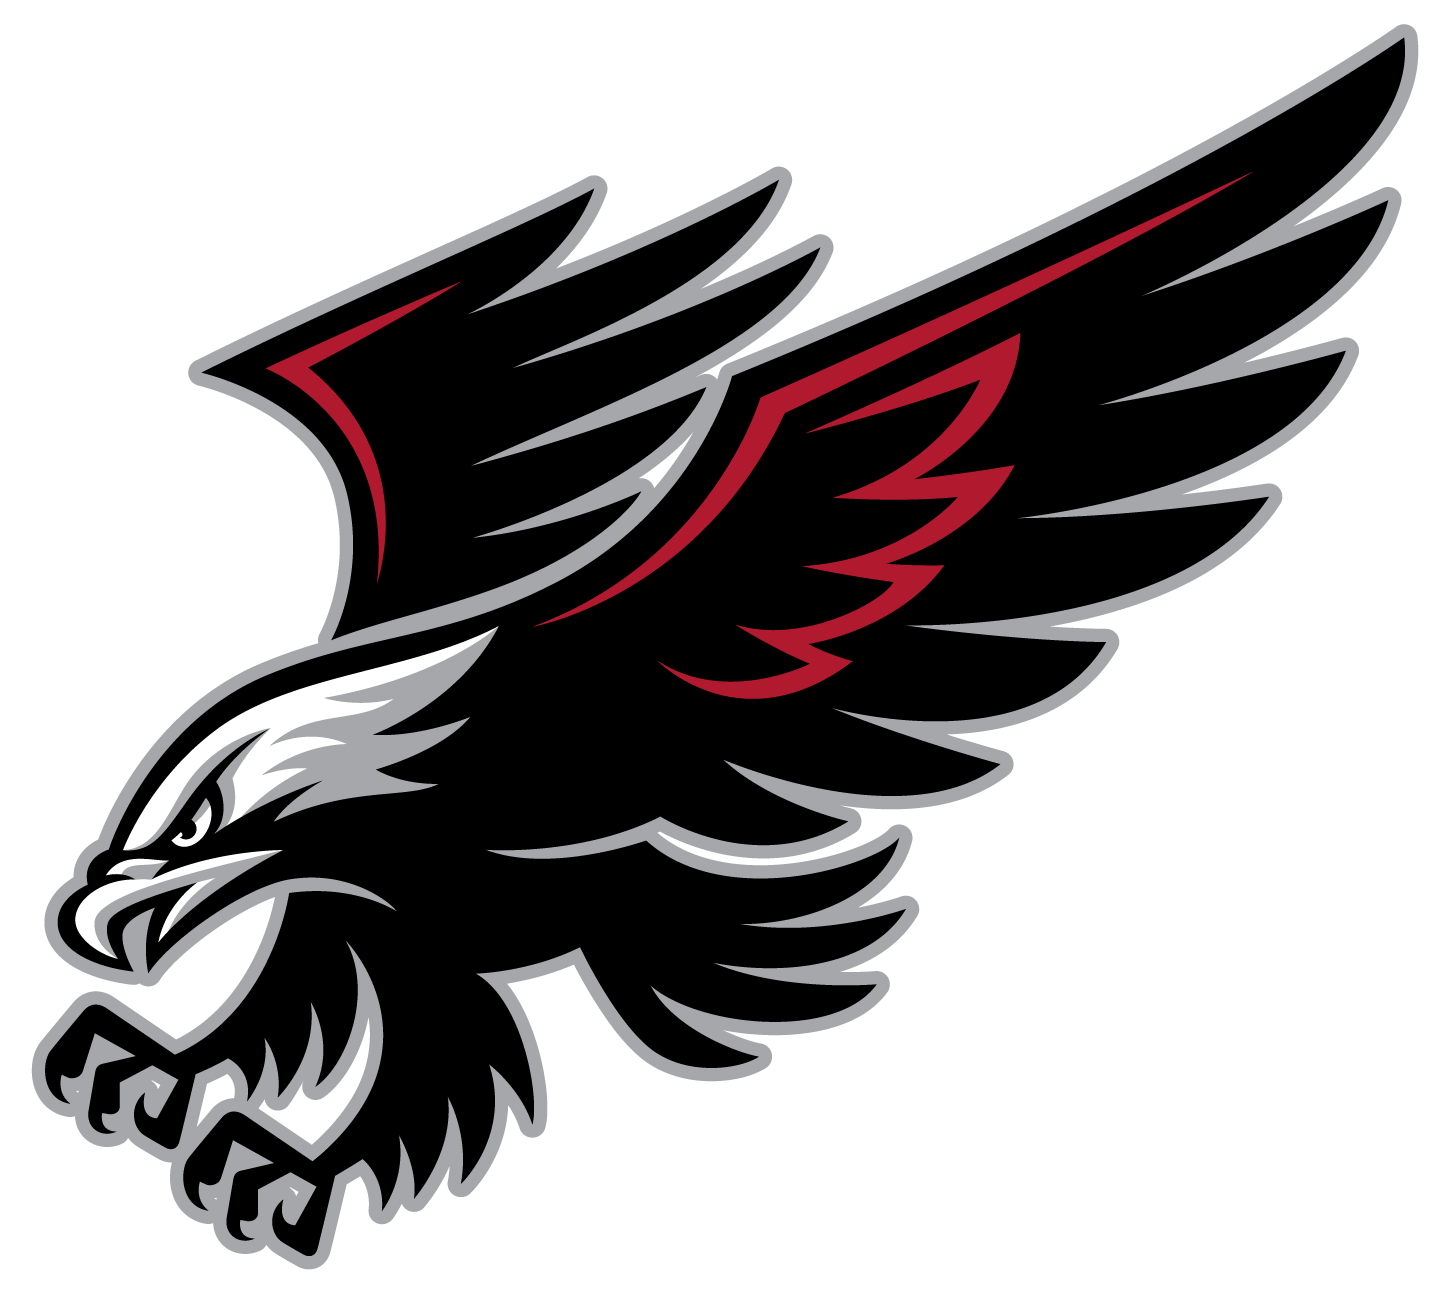 Cool Hawks Logo - Free Flying Hawk Cliparts, Download Free Clip Art, Free Clip Art on ...